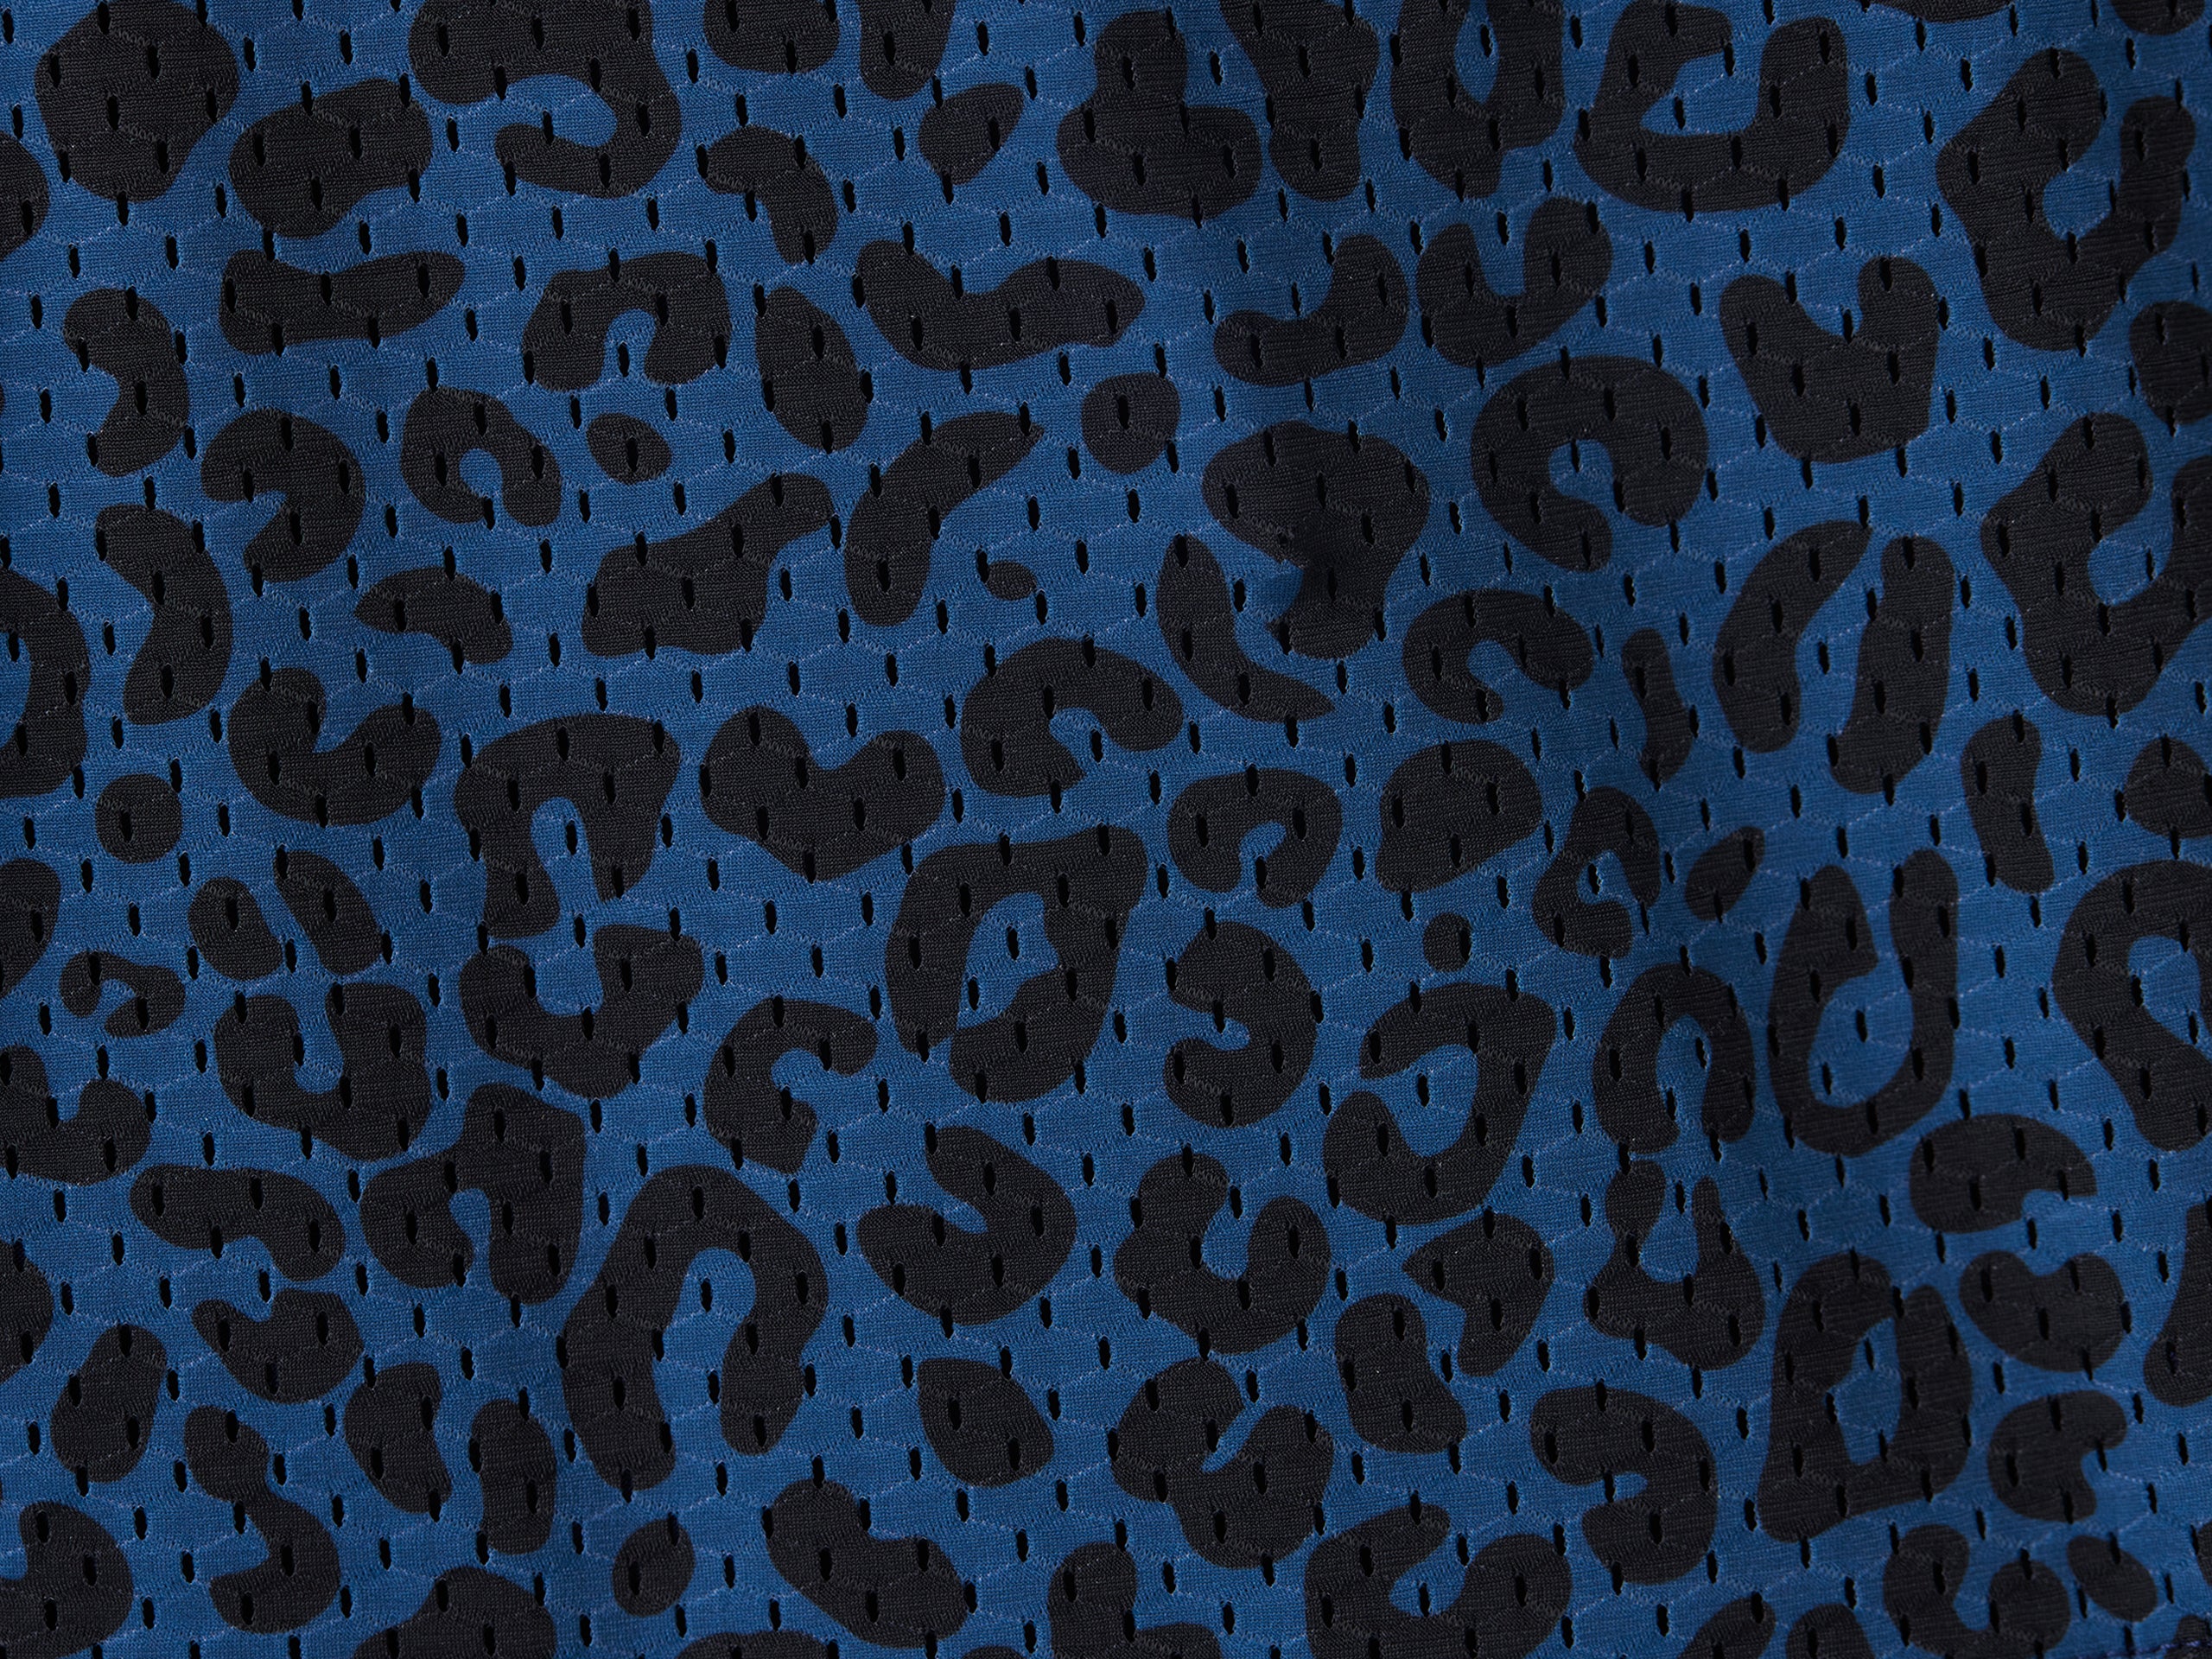 Detail shot of blue leopard print mesh